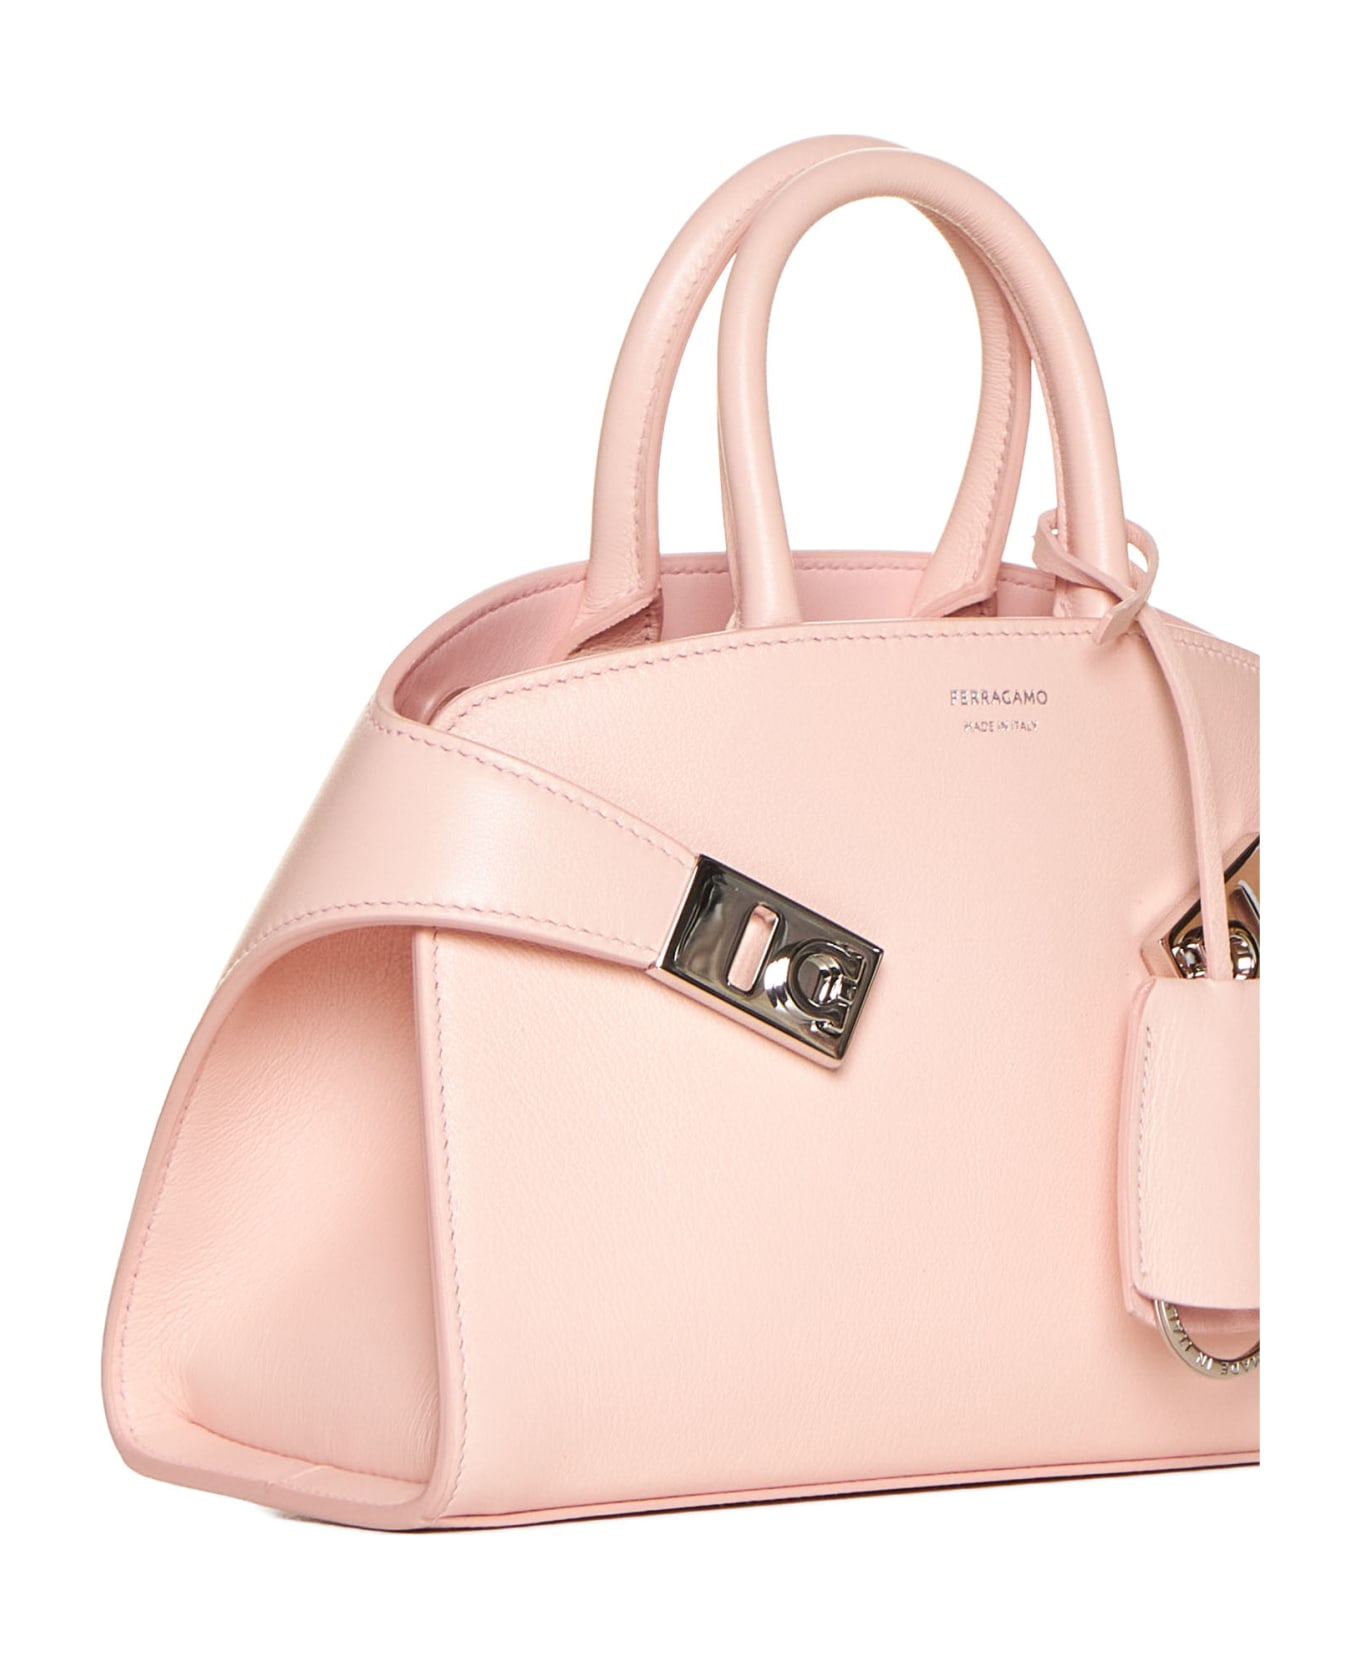 Ferragamo 'hug Mini' Handbag - Nylund pink トートバッグ